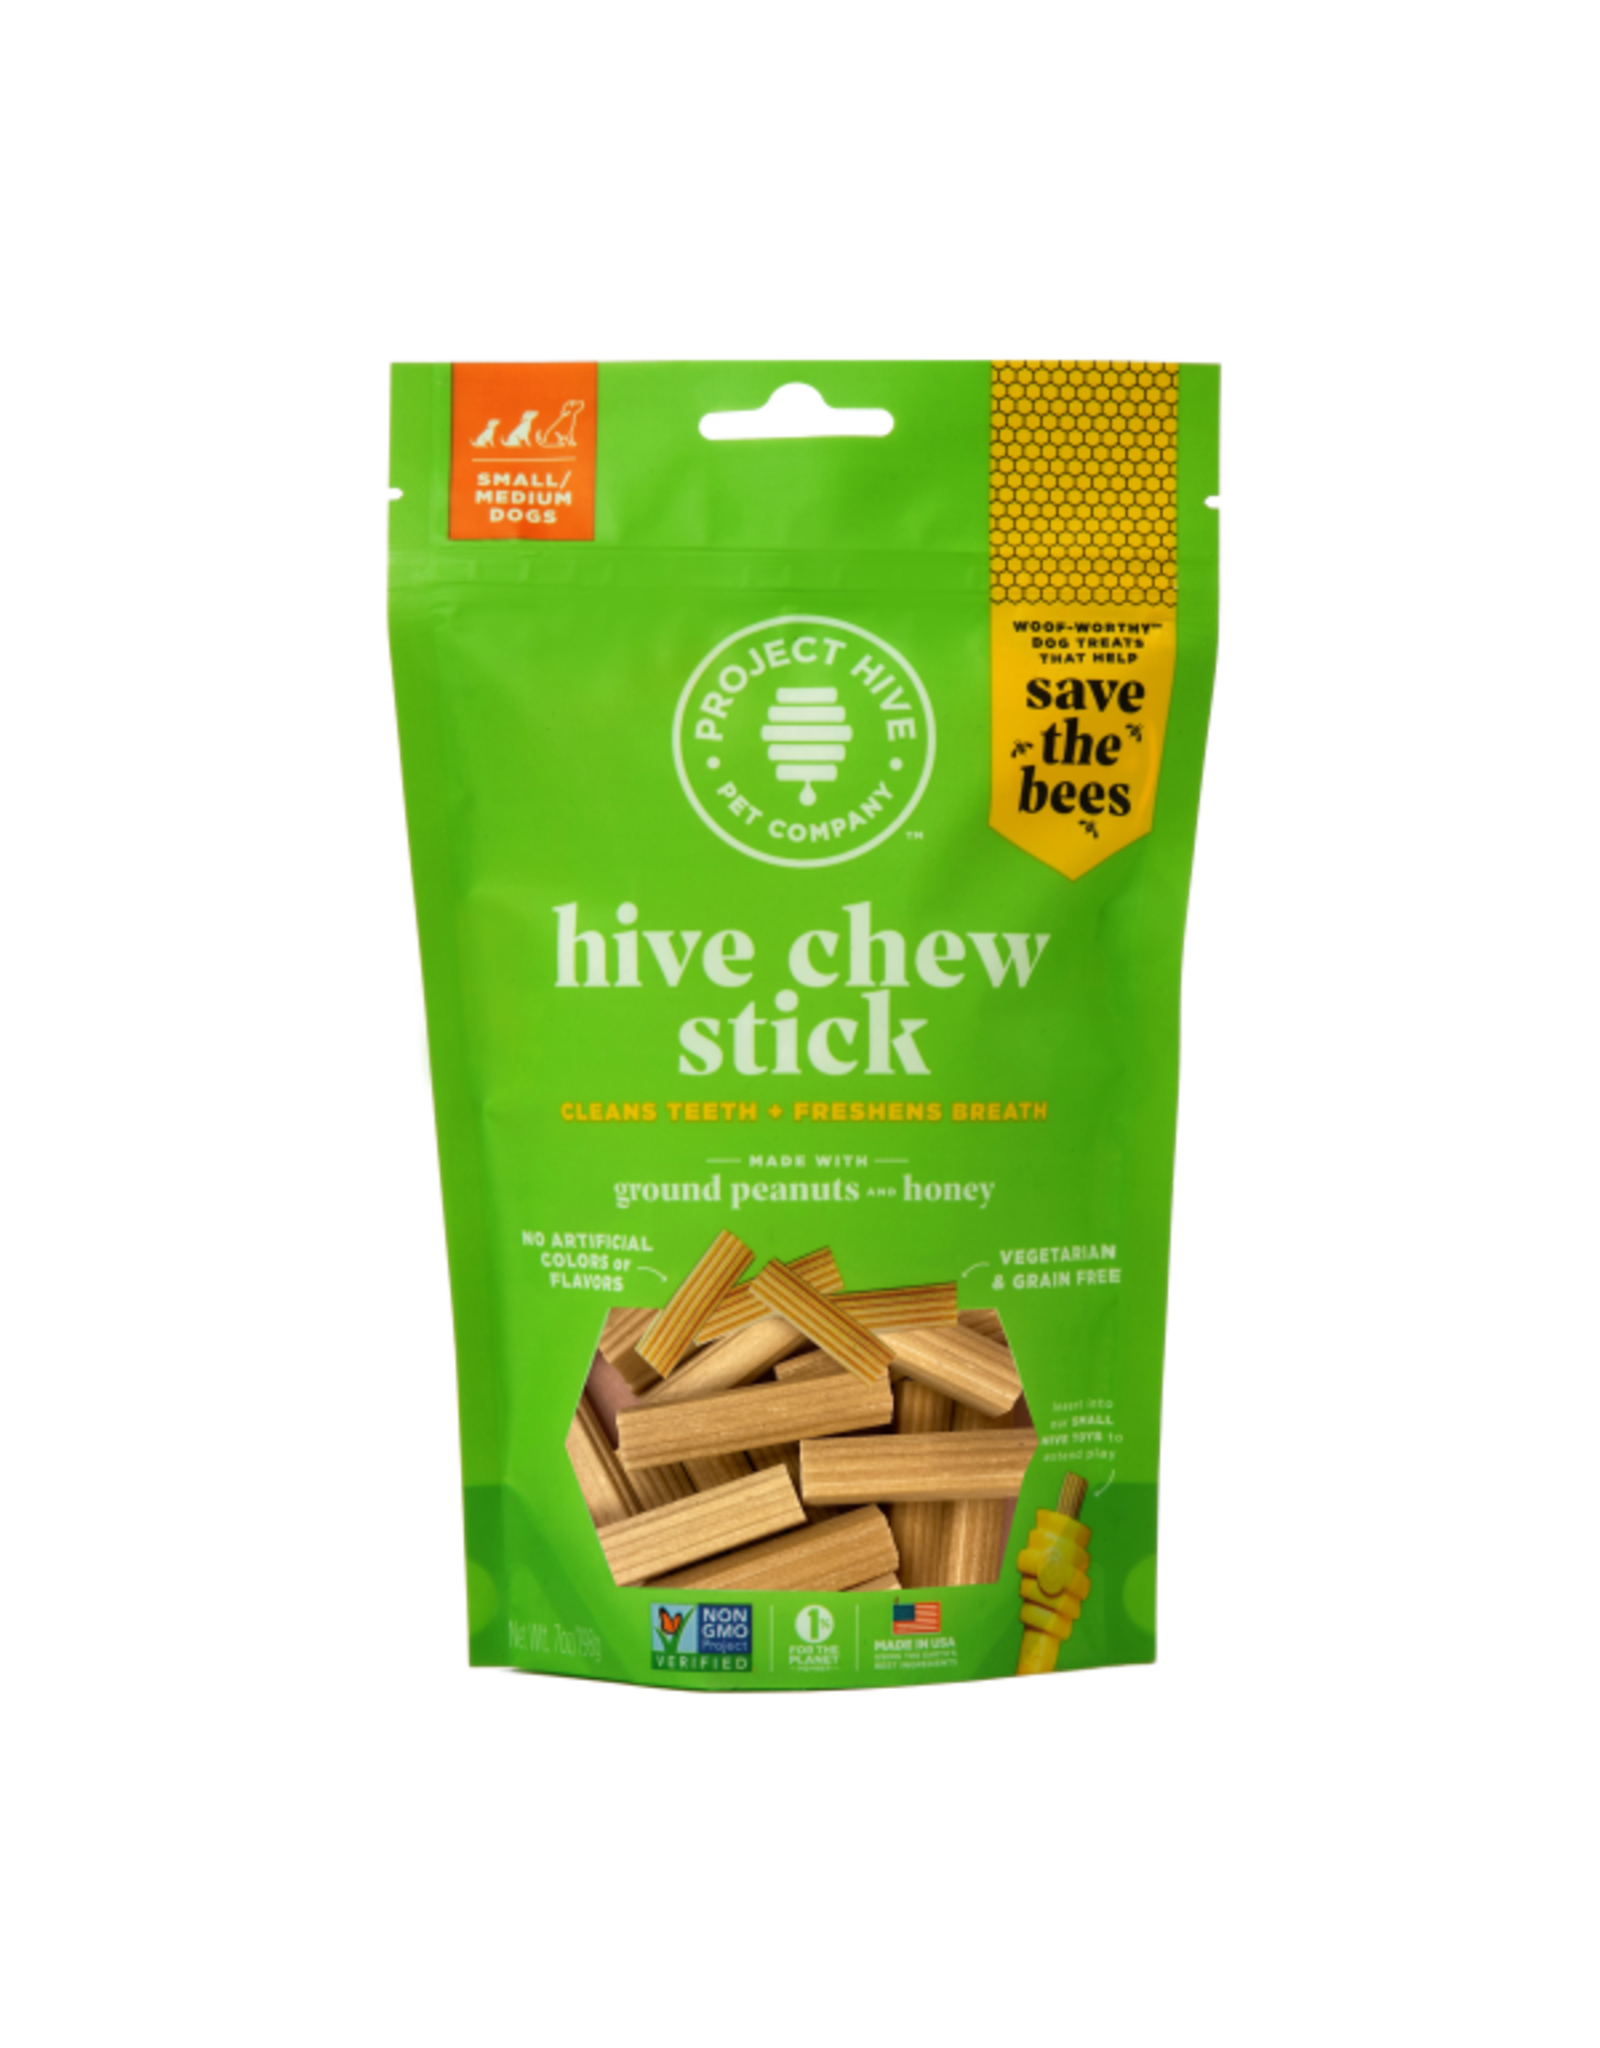 Project Hive Project Hive Chew Sticks SM 7 OZ